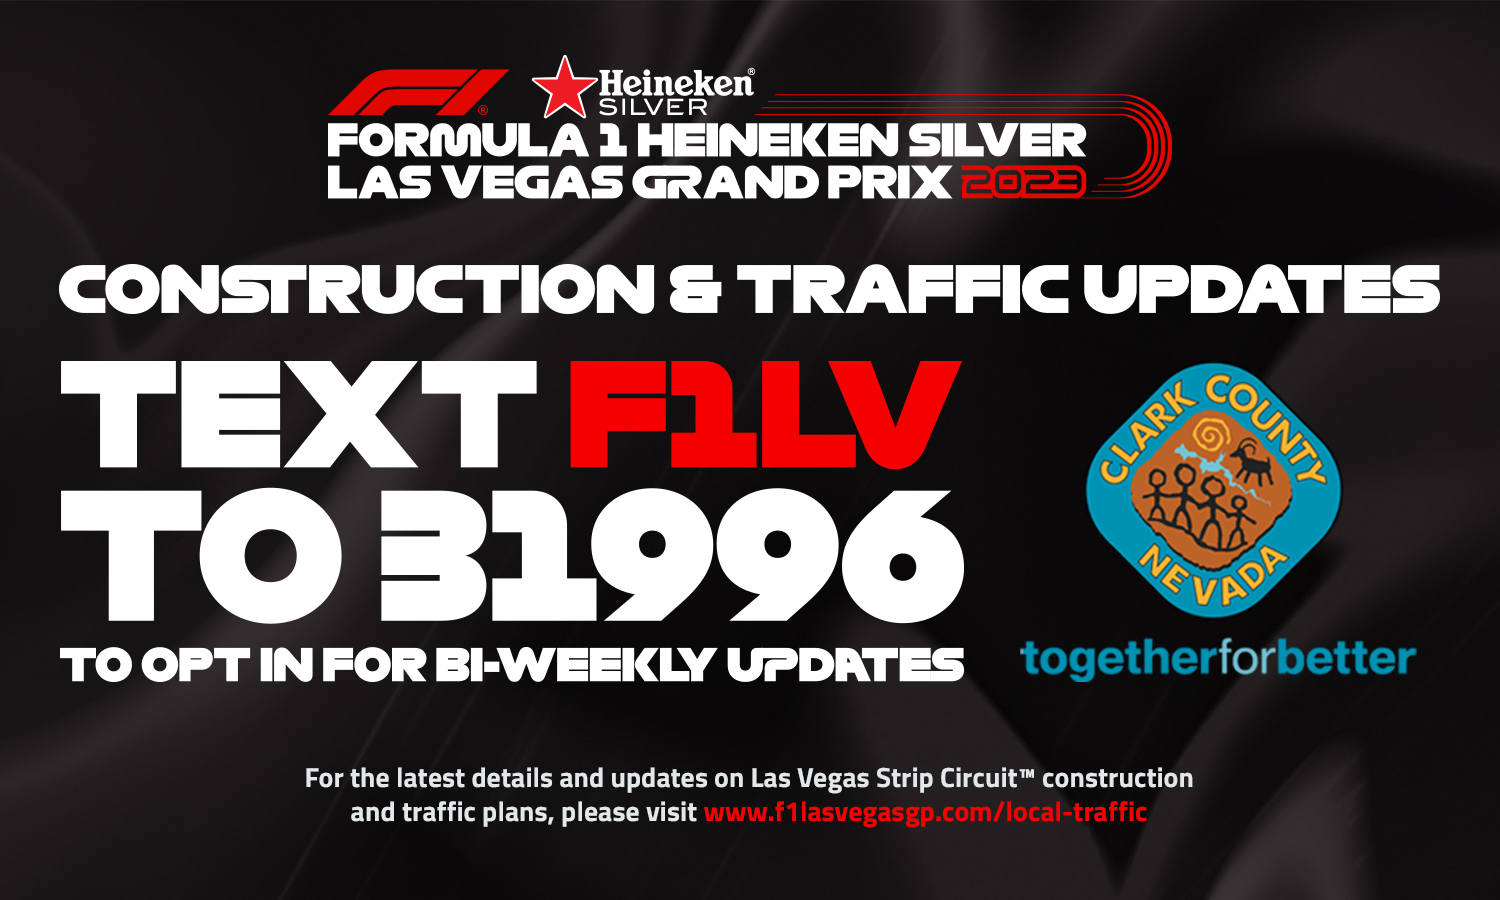 Las Vegas Grand Prix updates paving schedule through early fall